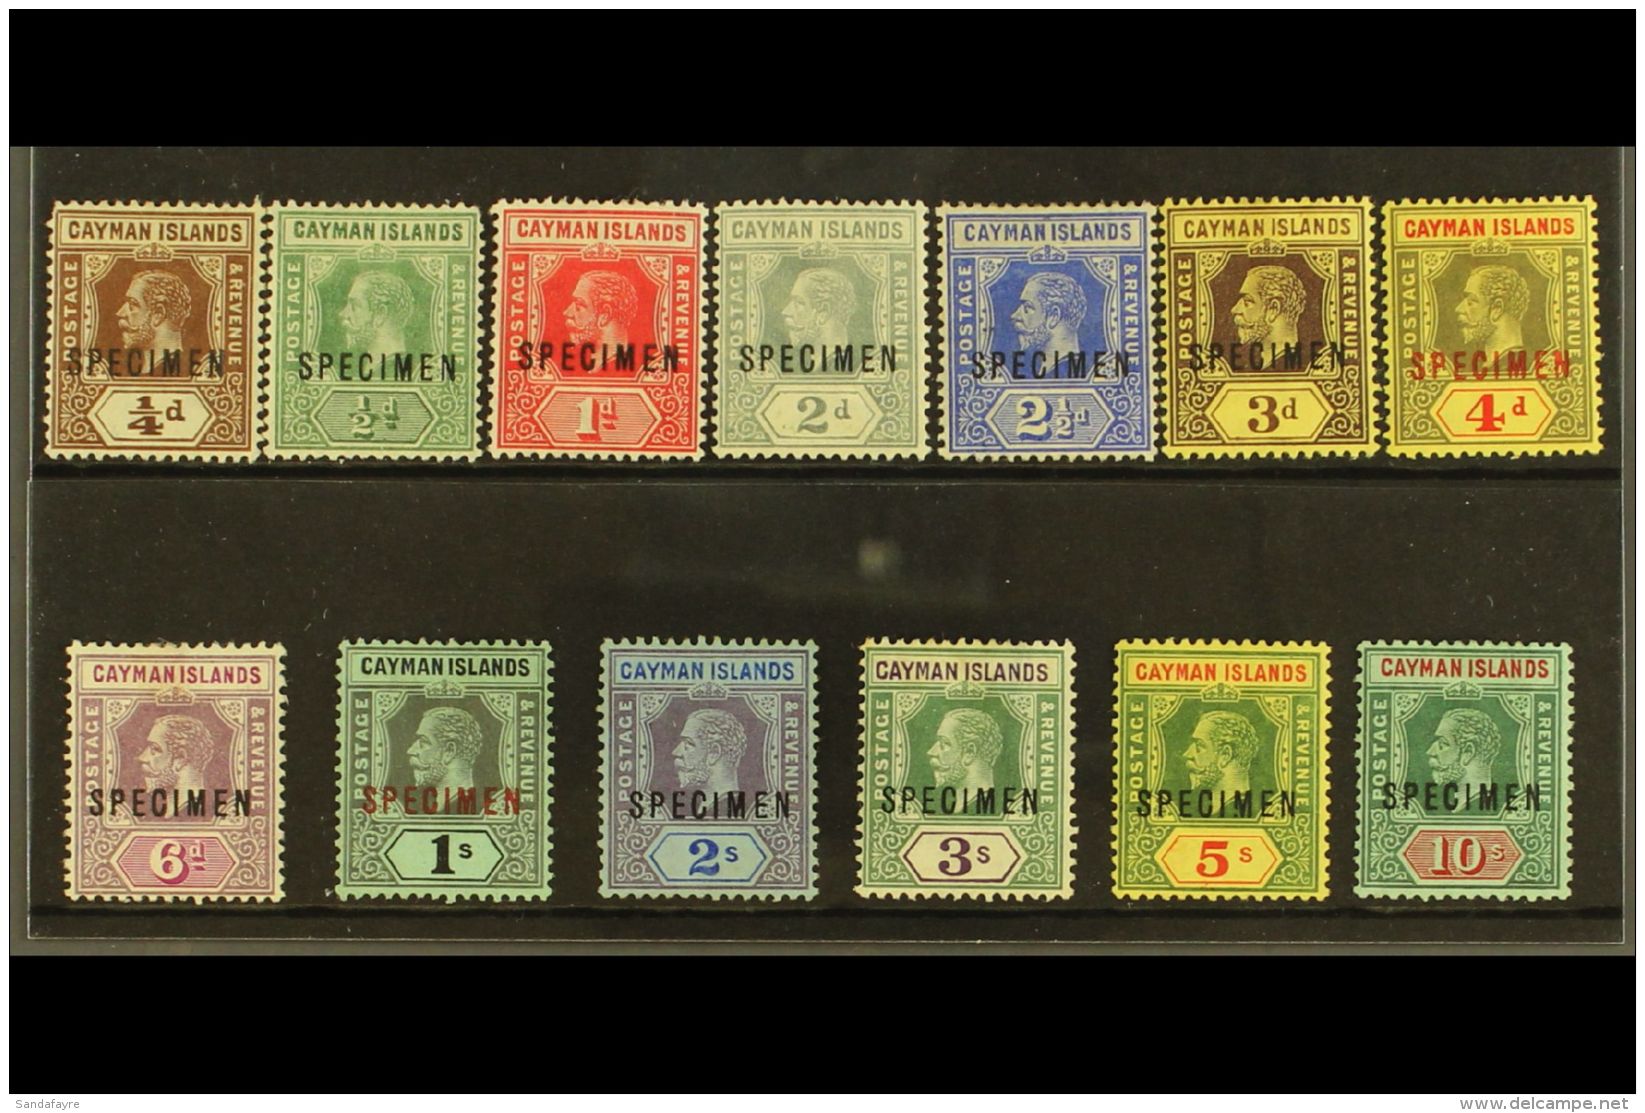 1912-20 SPECIMENS KGV Complete Set With "SPECIMEN" Overprints, SG 40s/52s, Fine Mint With Good Colour. Attractive... - Cayman Islands